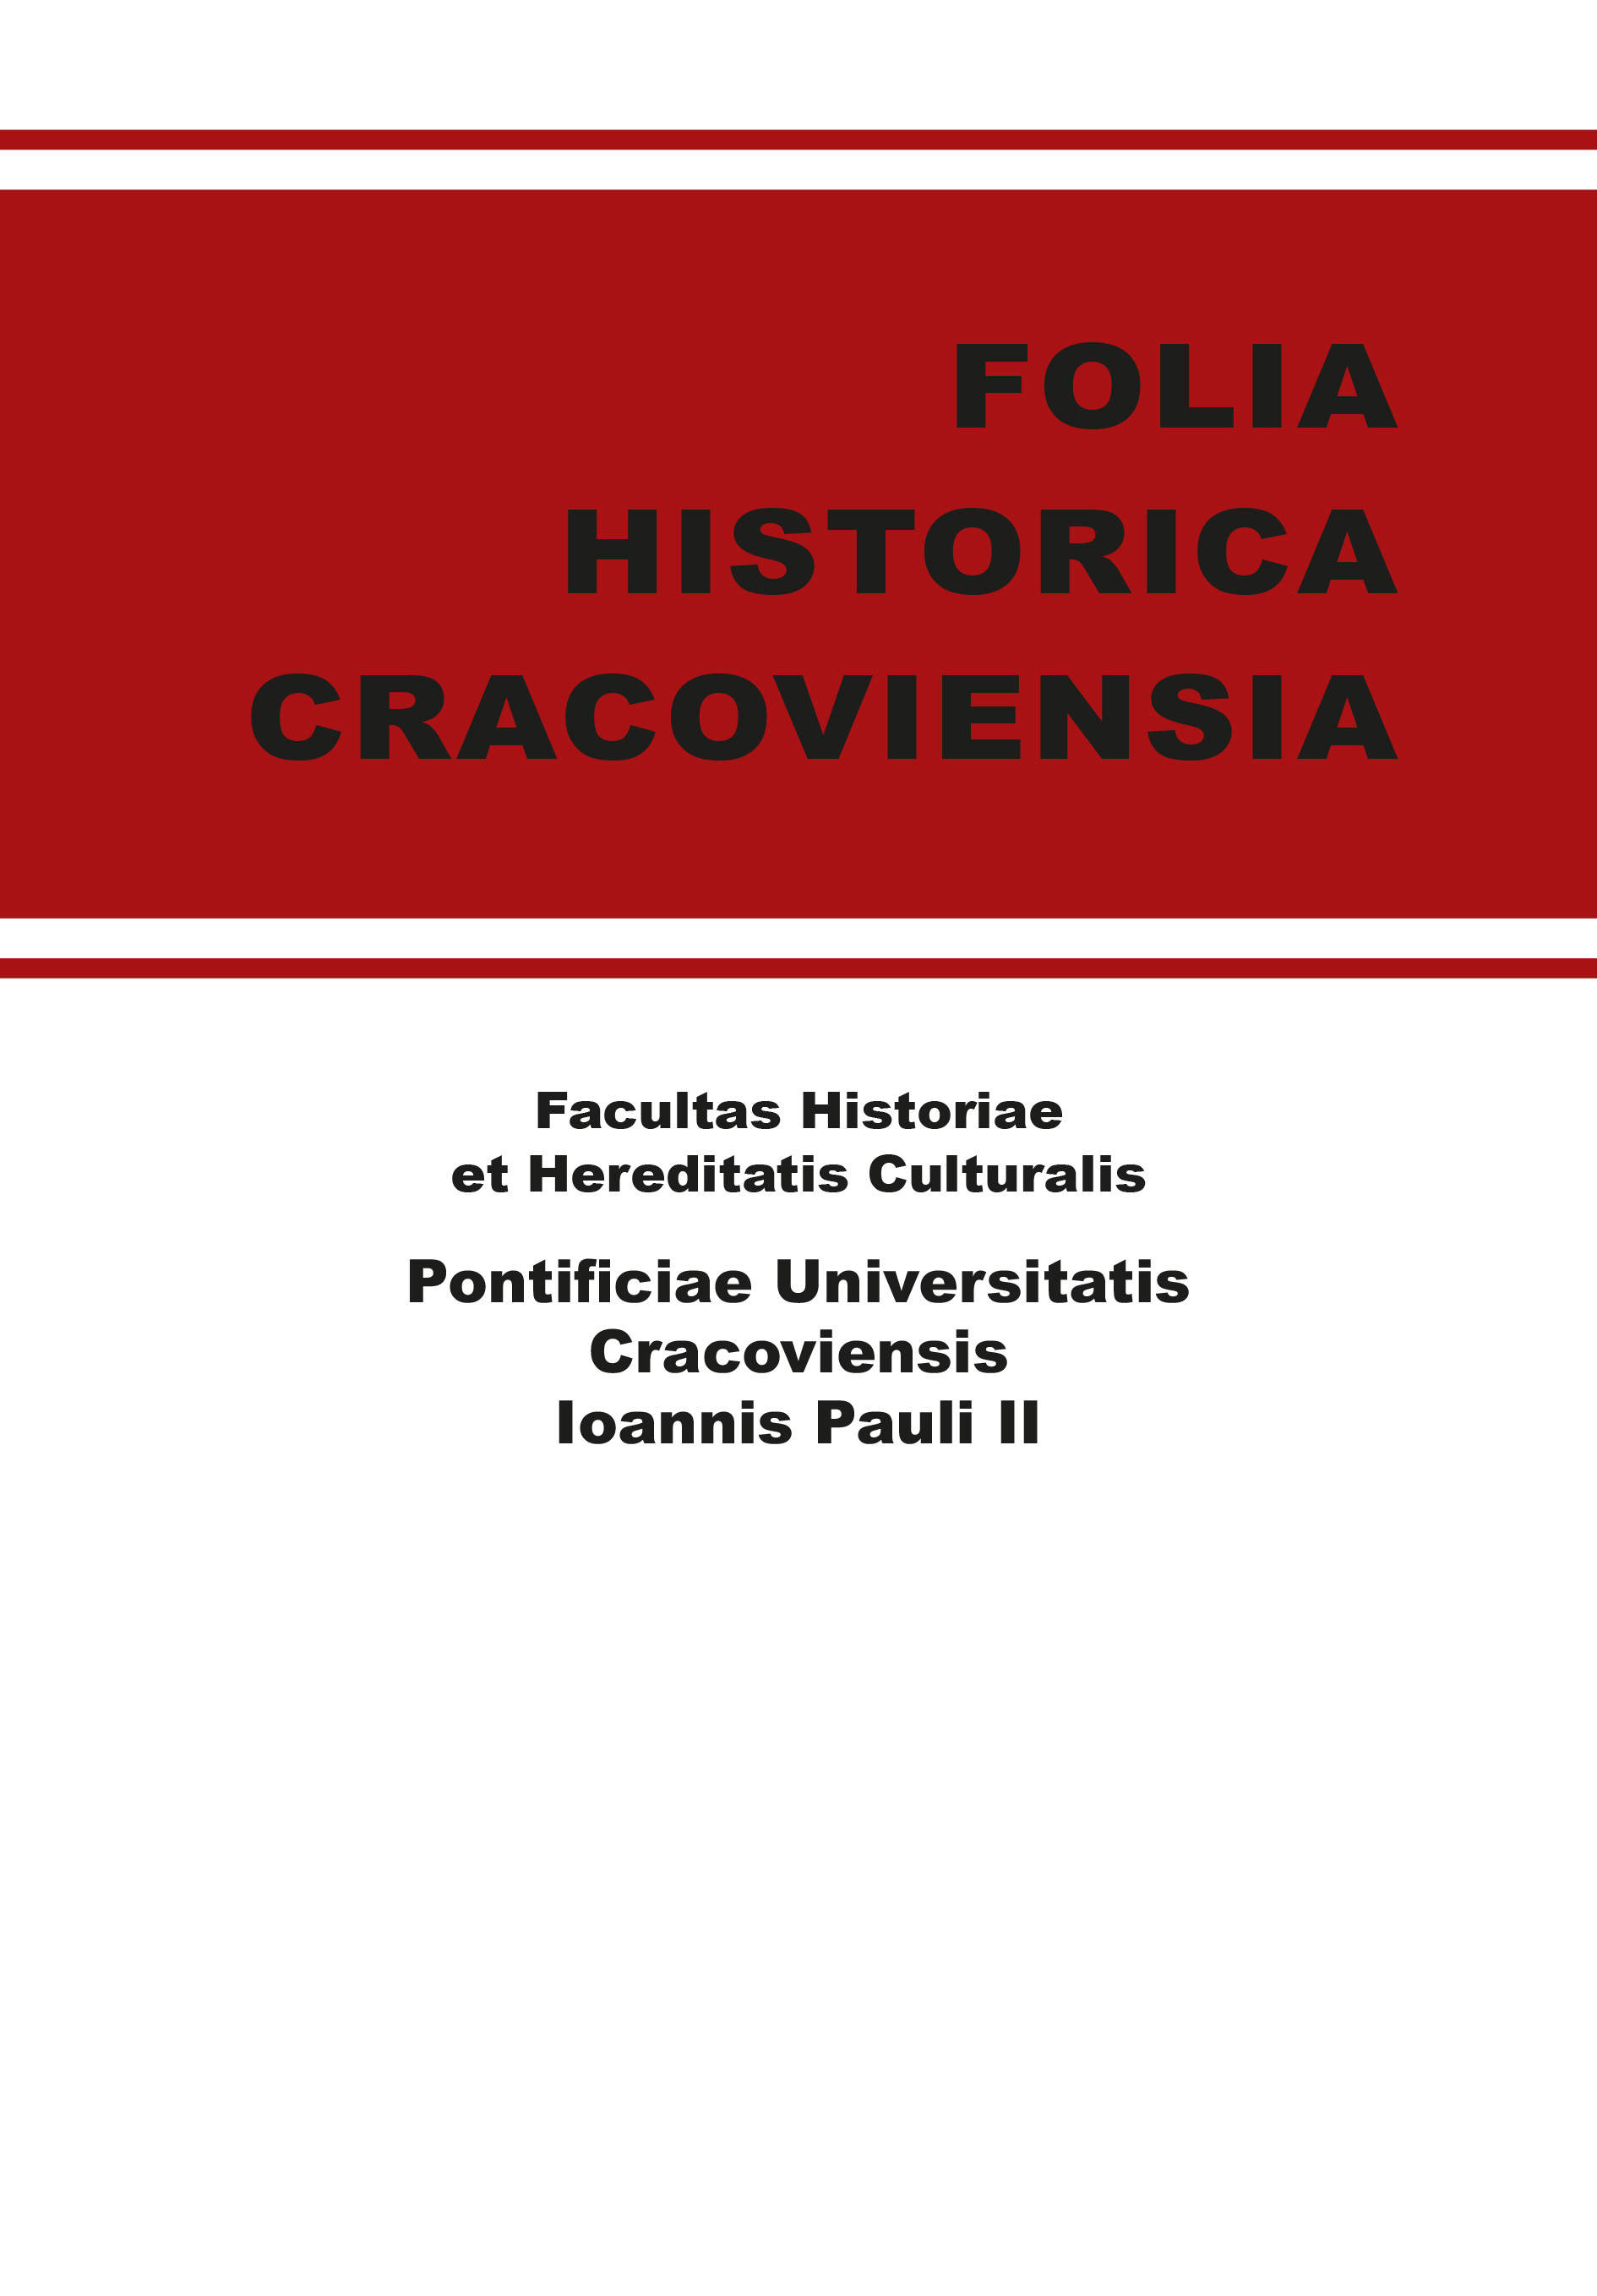 Okładka Folia Historica Cracoviensia 20 (2014)